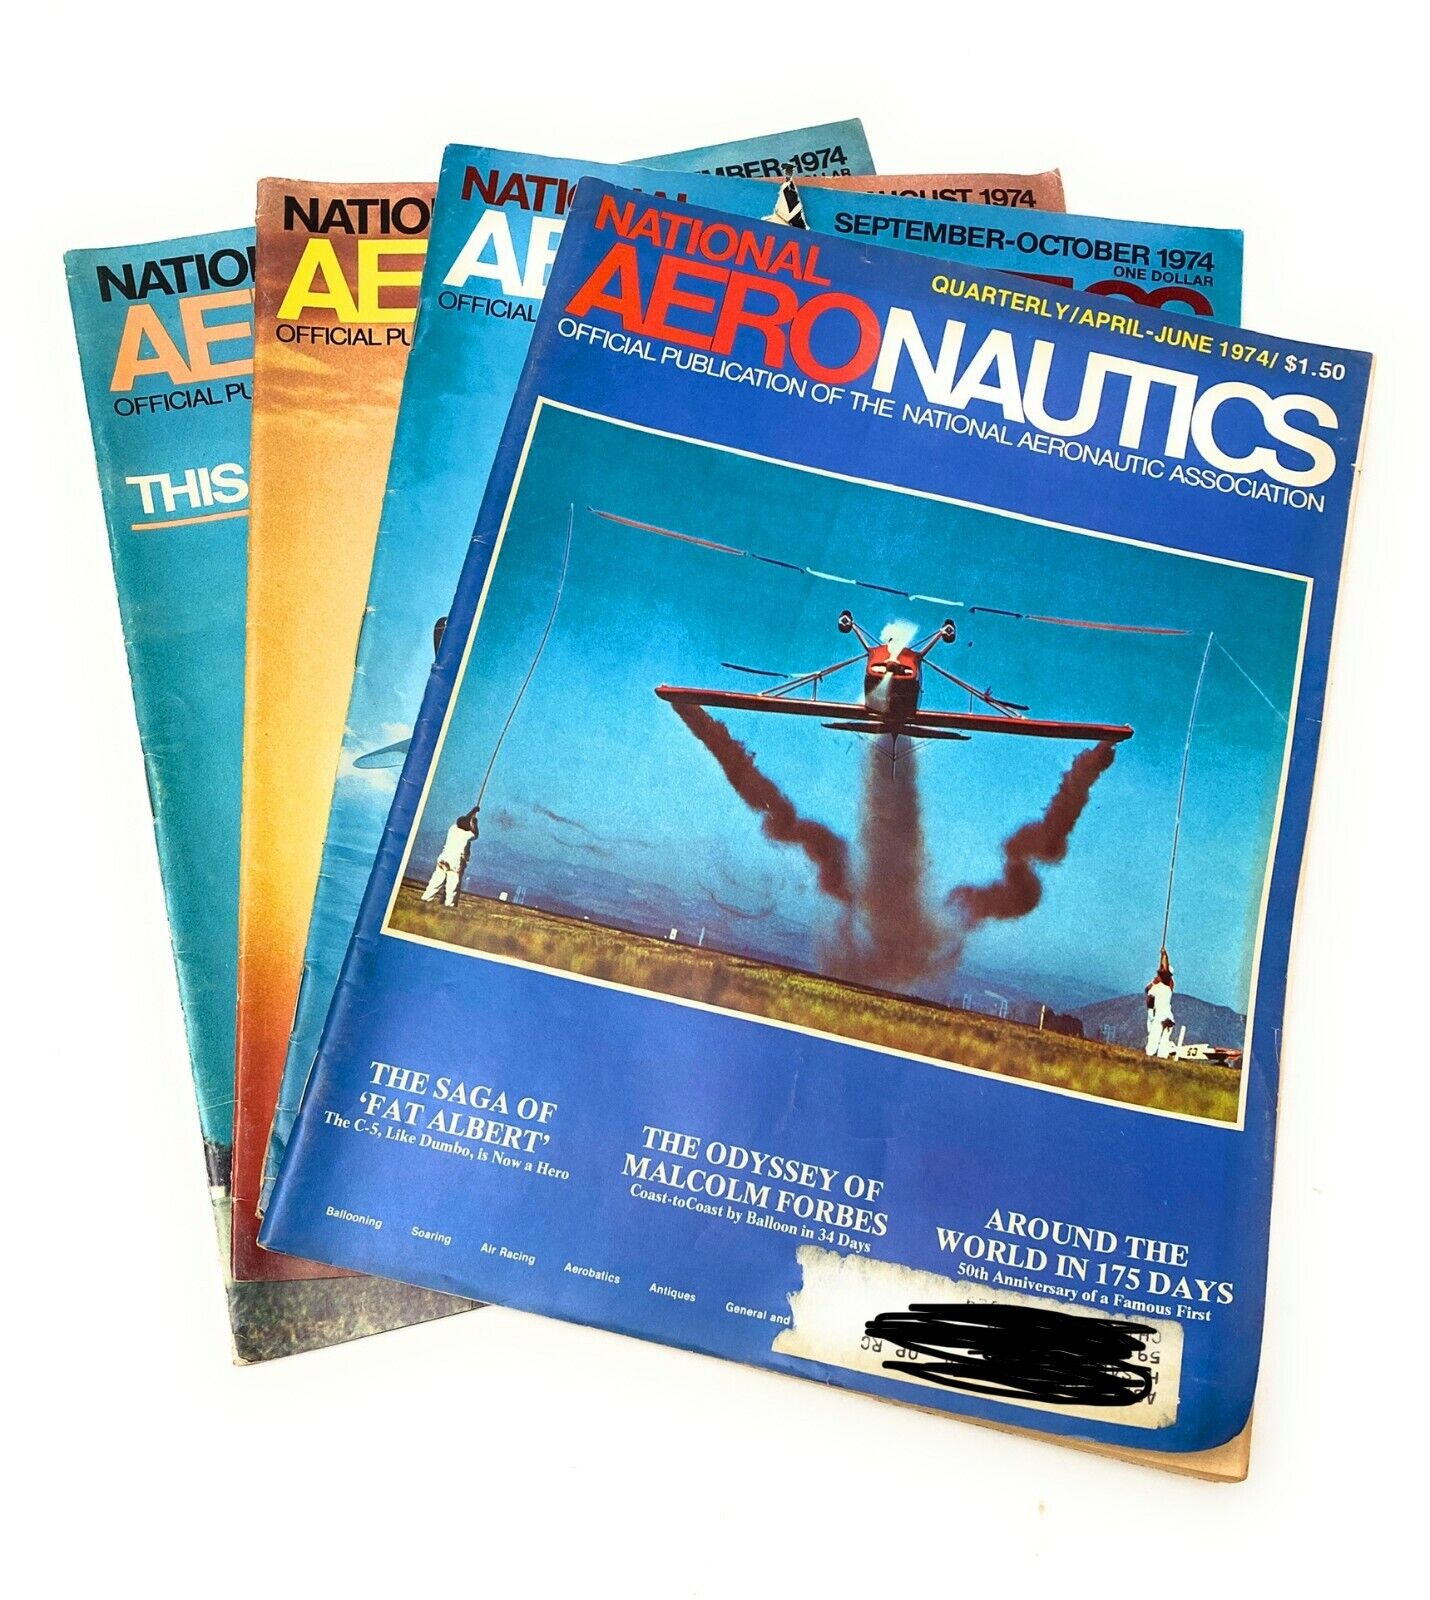 National Aeronautics Association Publication 1974 Magazines Lot of 4 - Read full